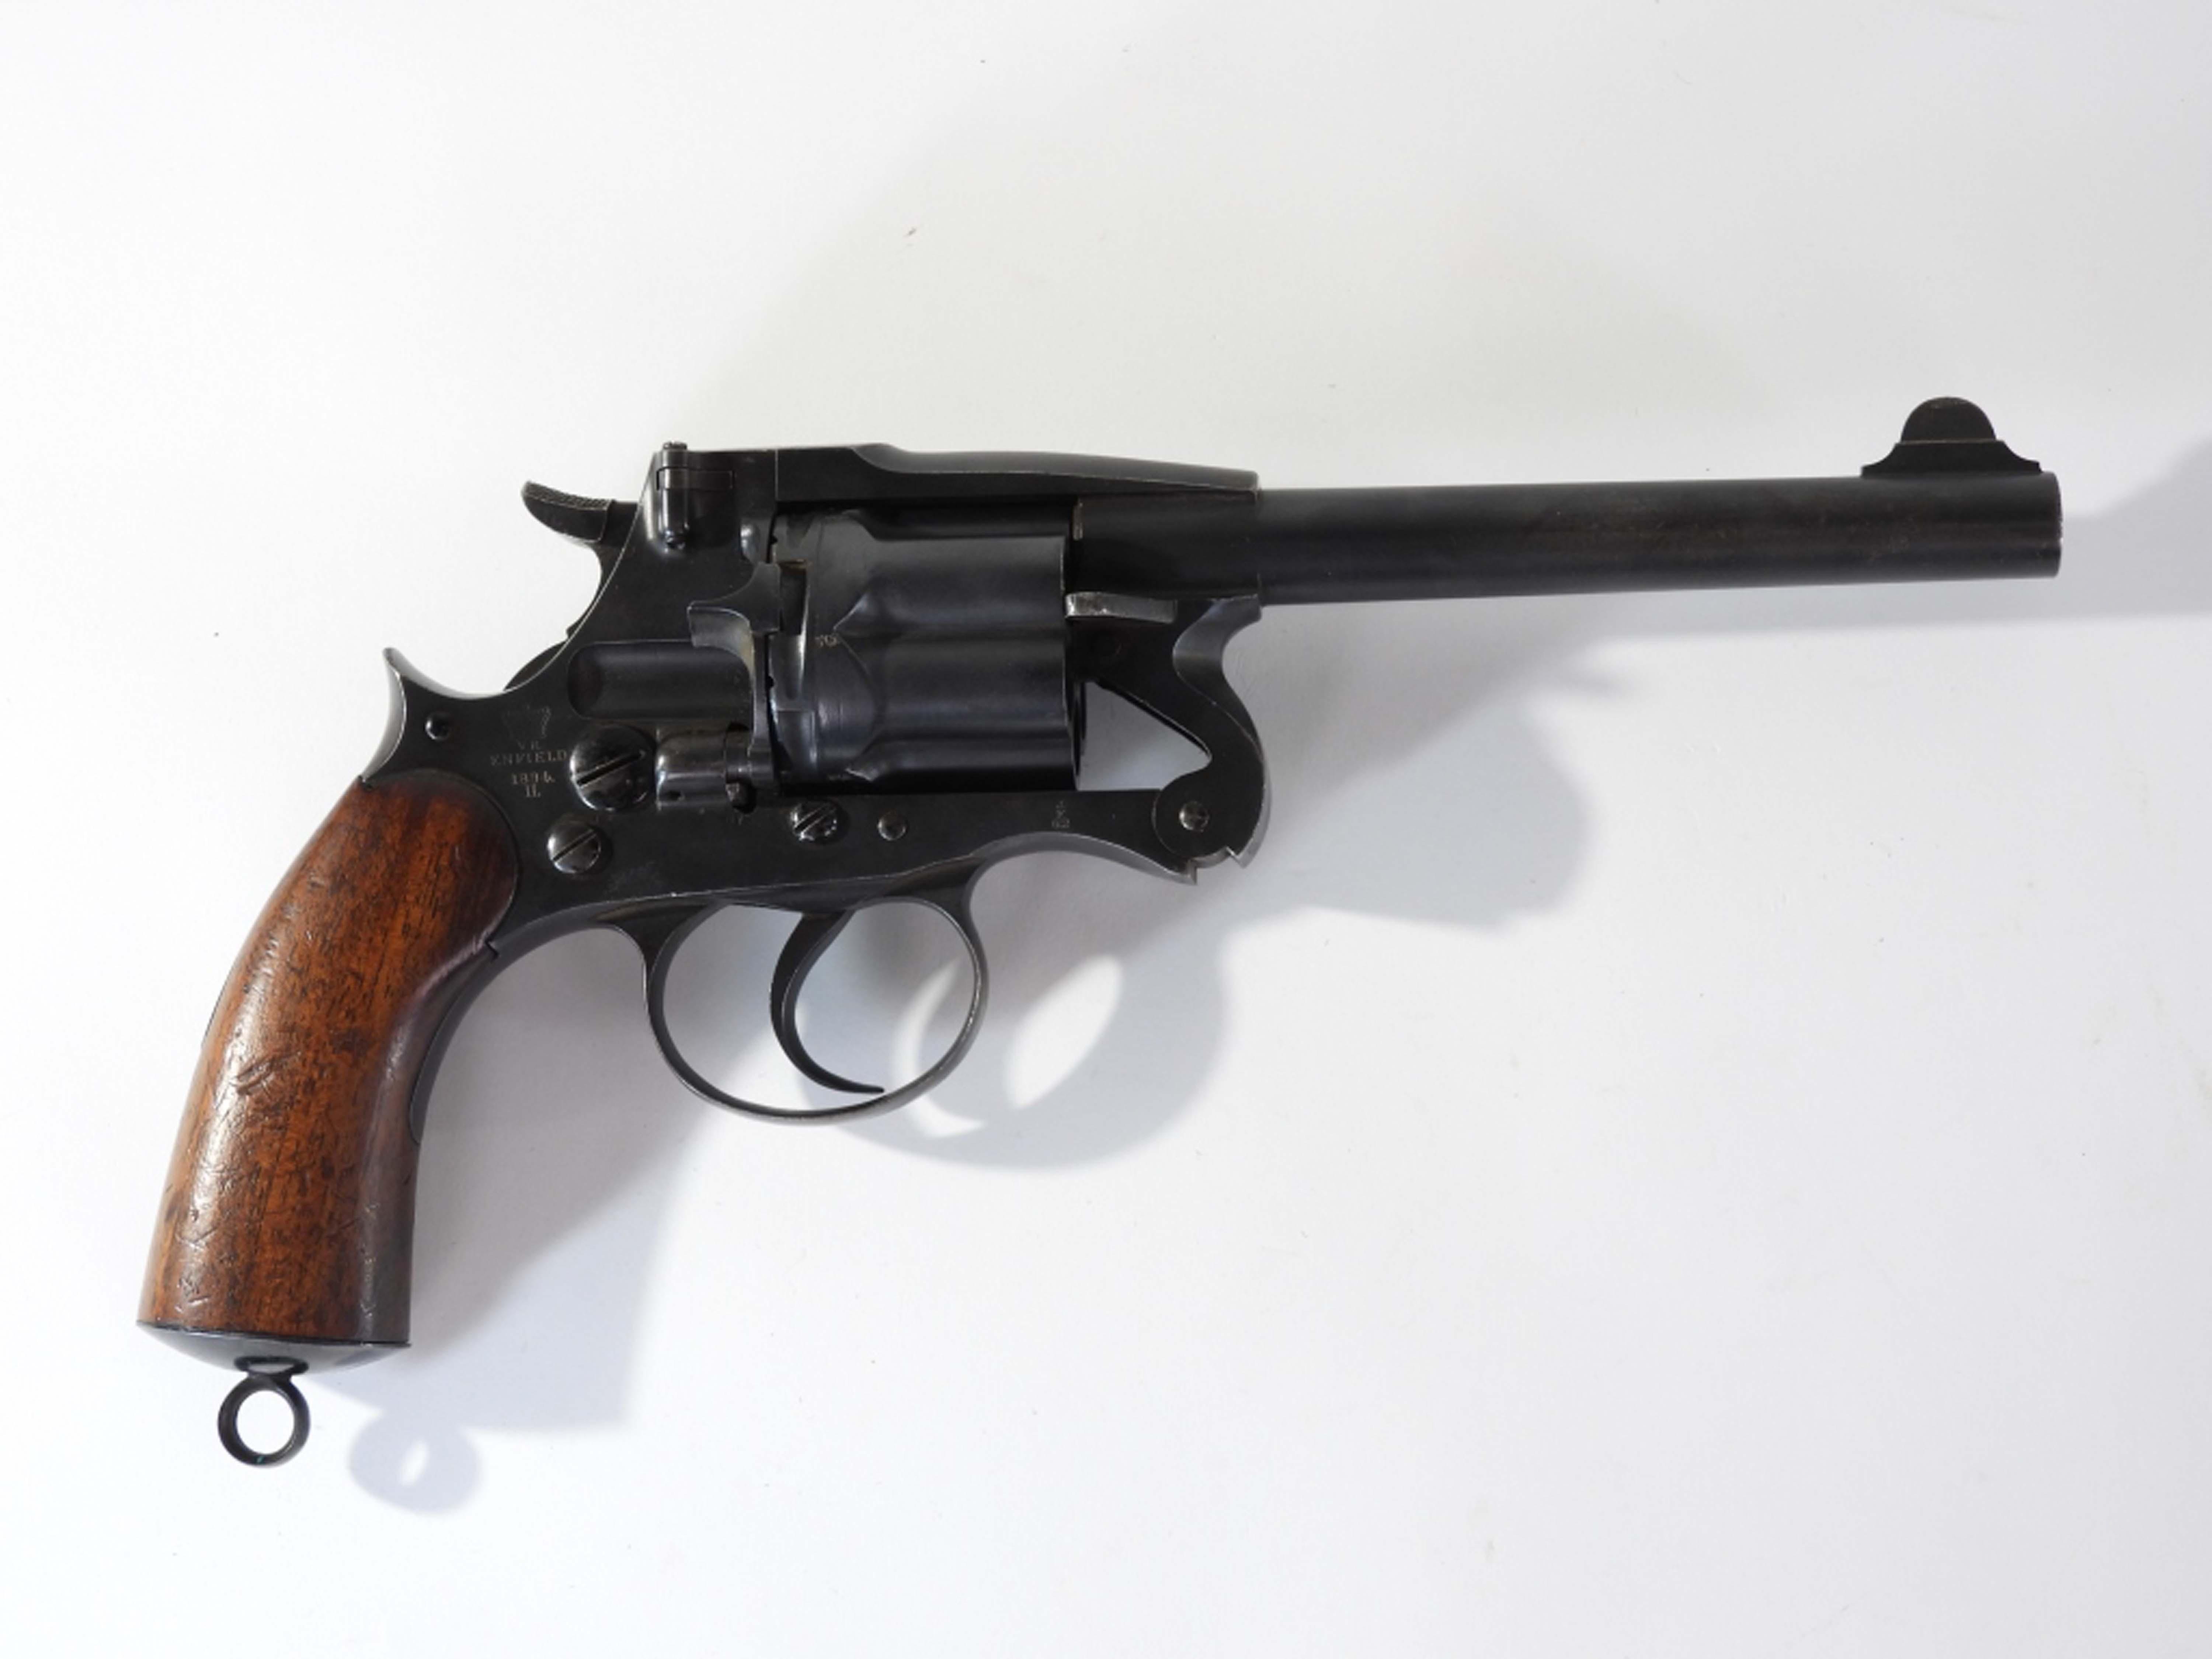 British Model 1884 Enfield revolver, est. $800-$1,200